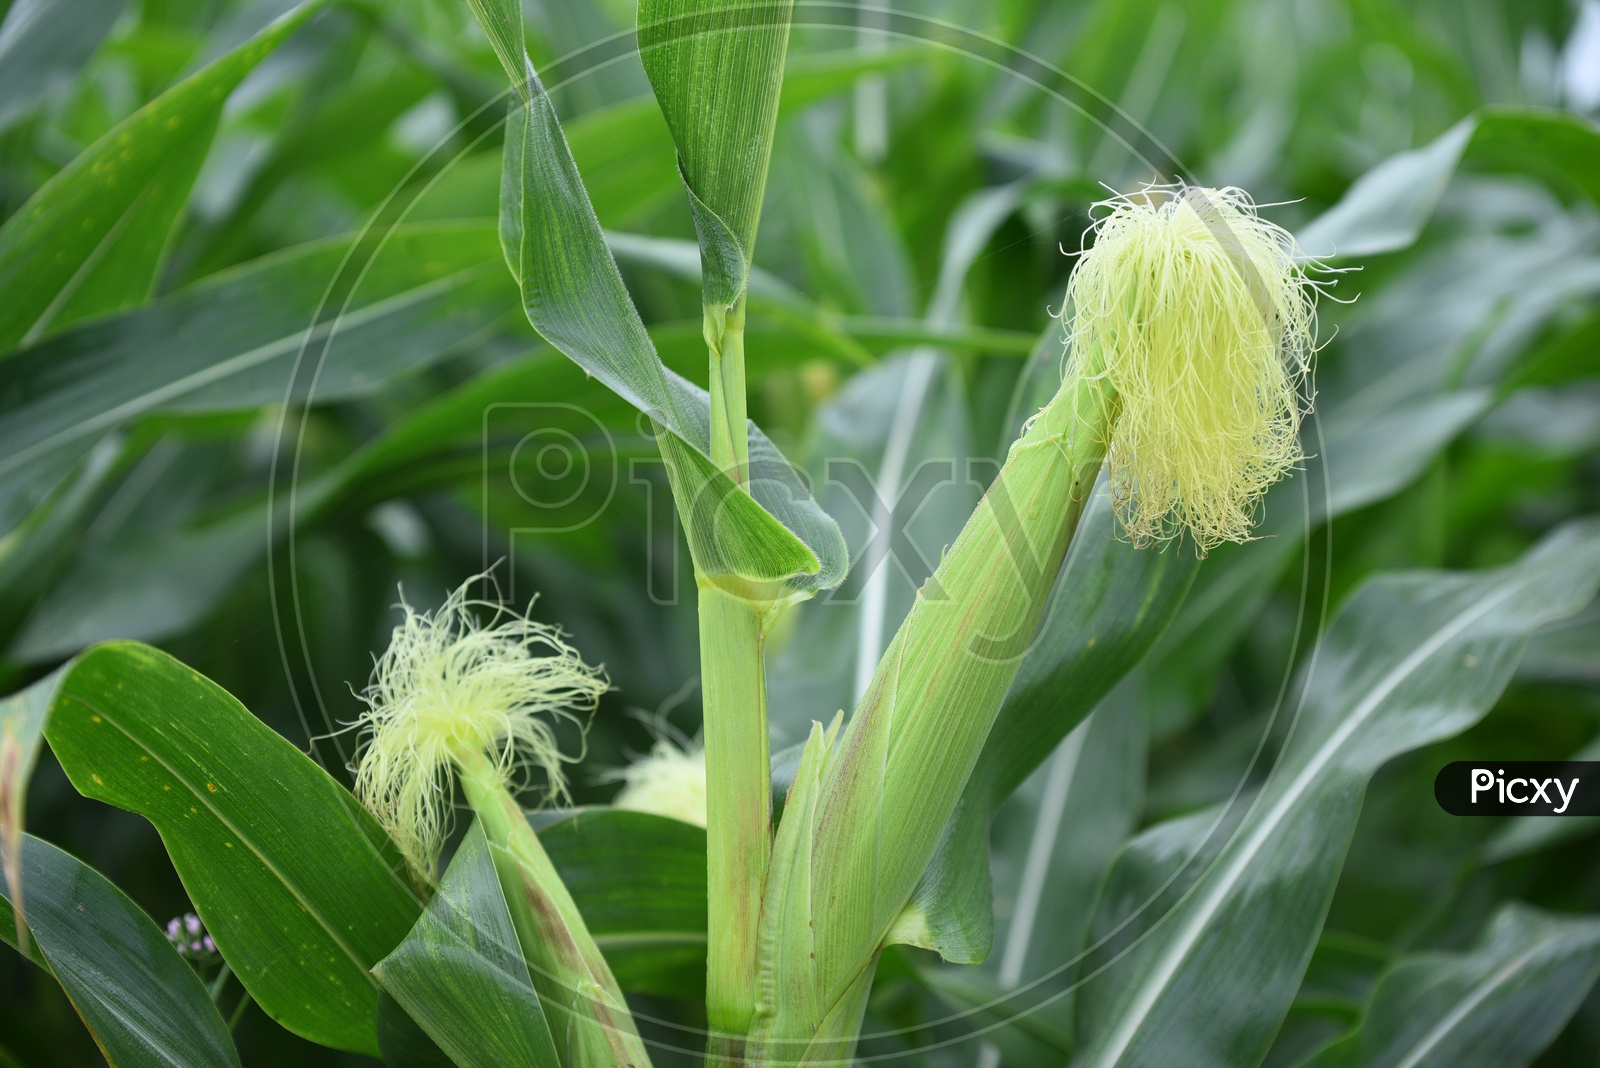 The corn or Maize in bright green in the corn field